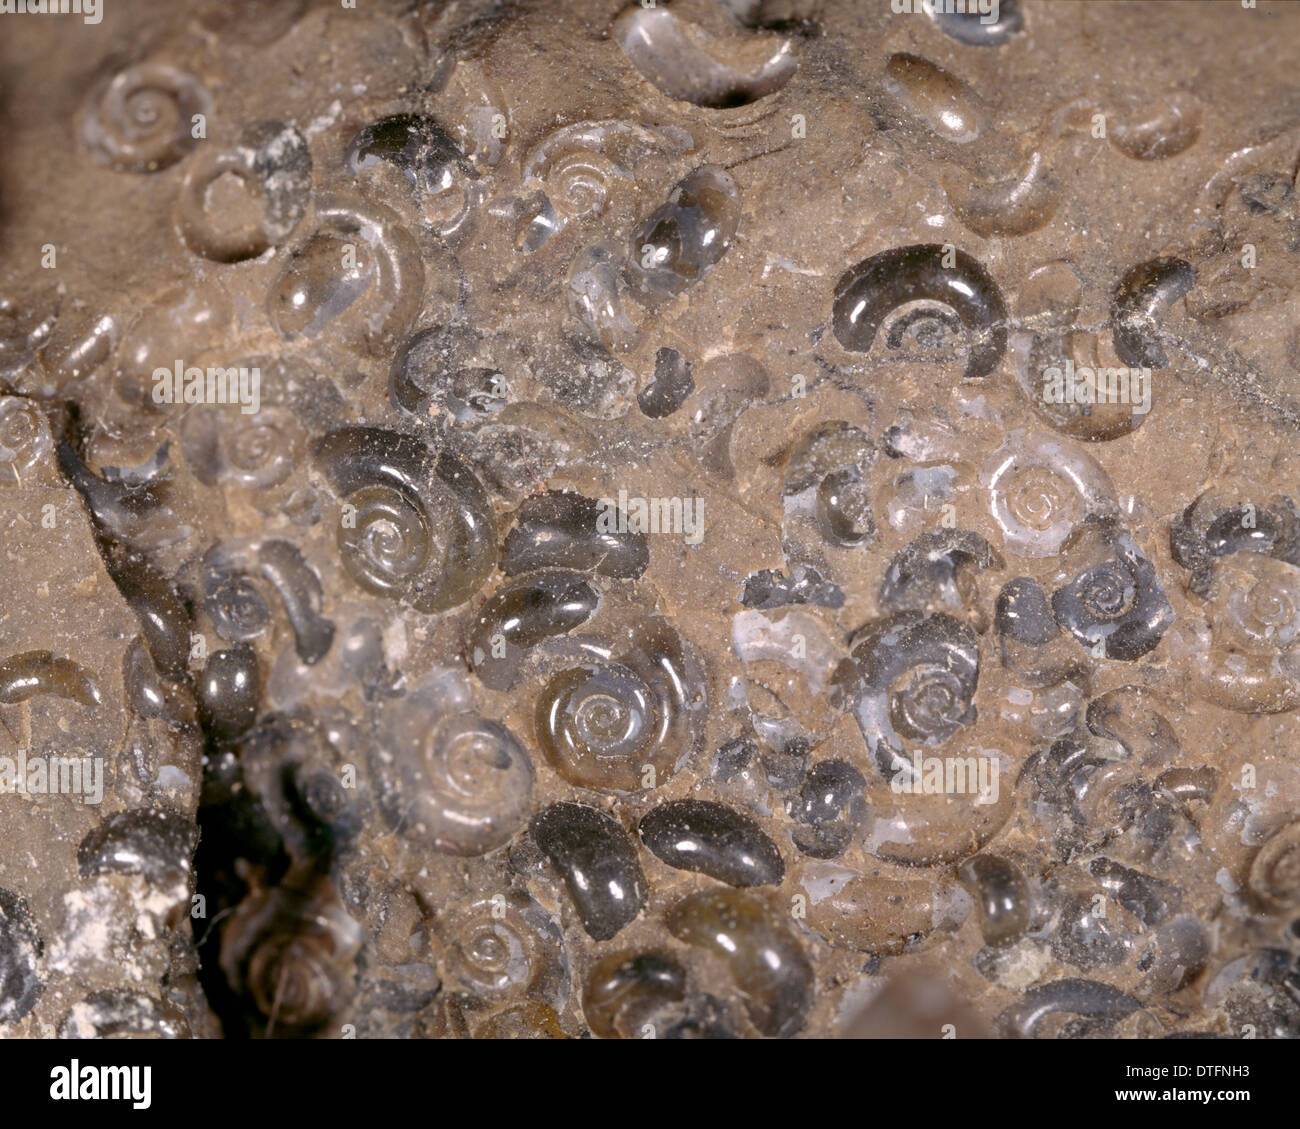 Limacina mercinensis, holoplanktonic mollusc Stock Photo